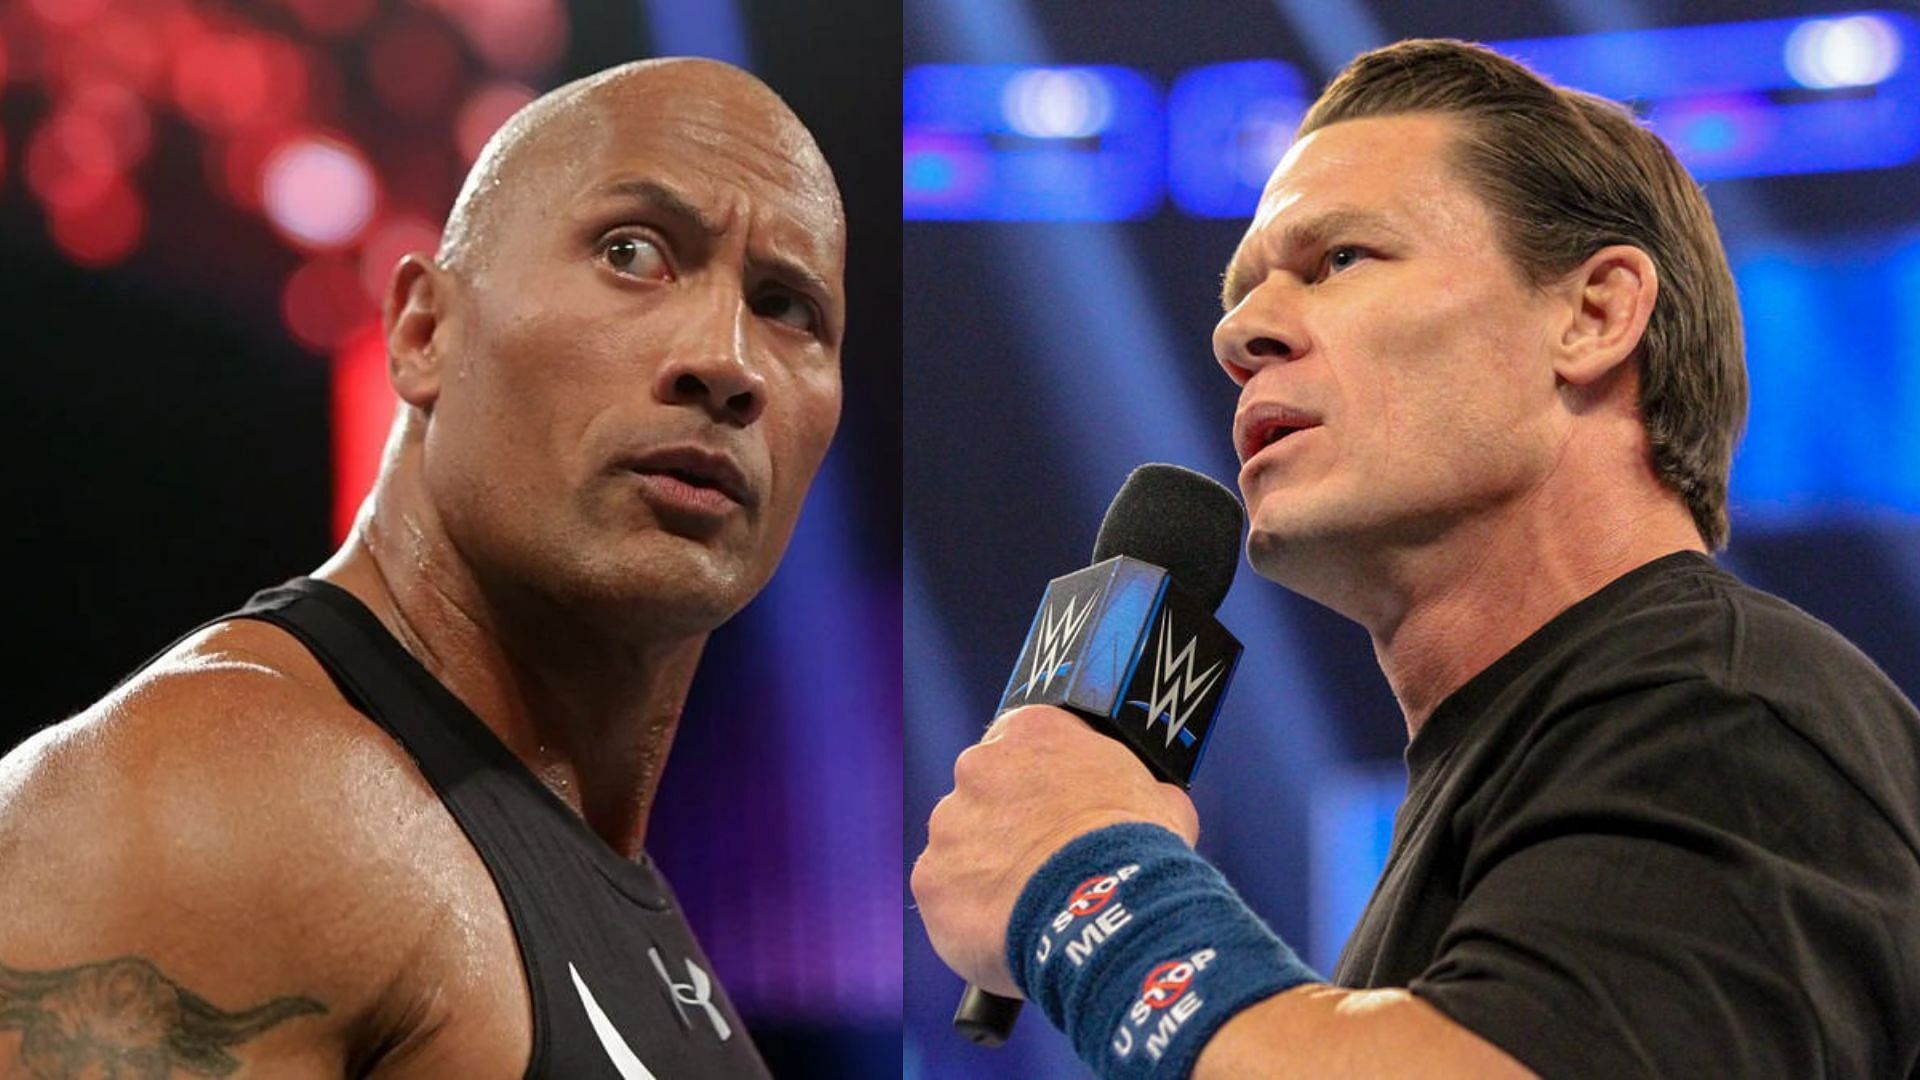 The Rock and John Cena are megastars.